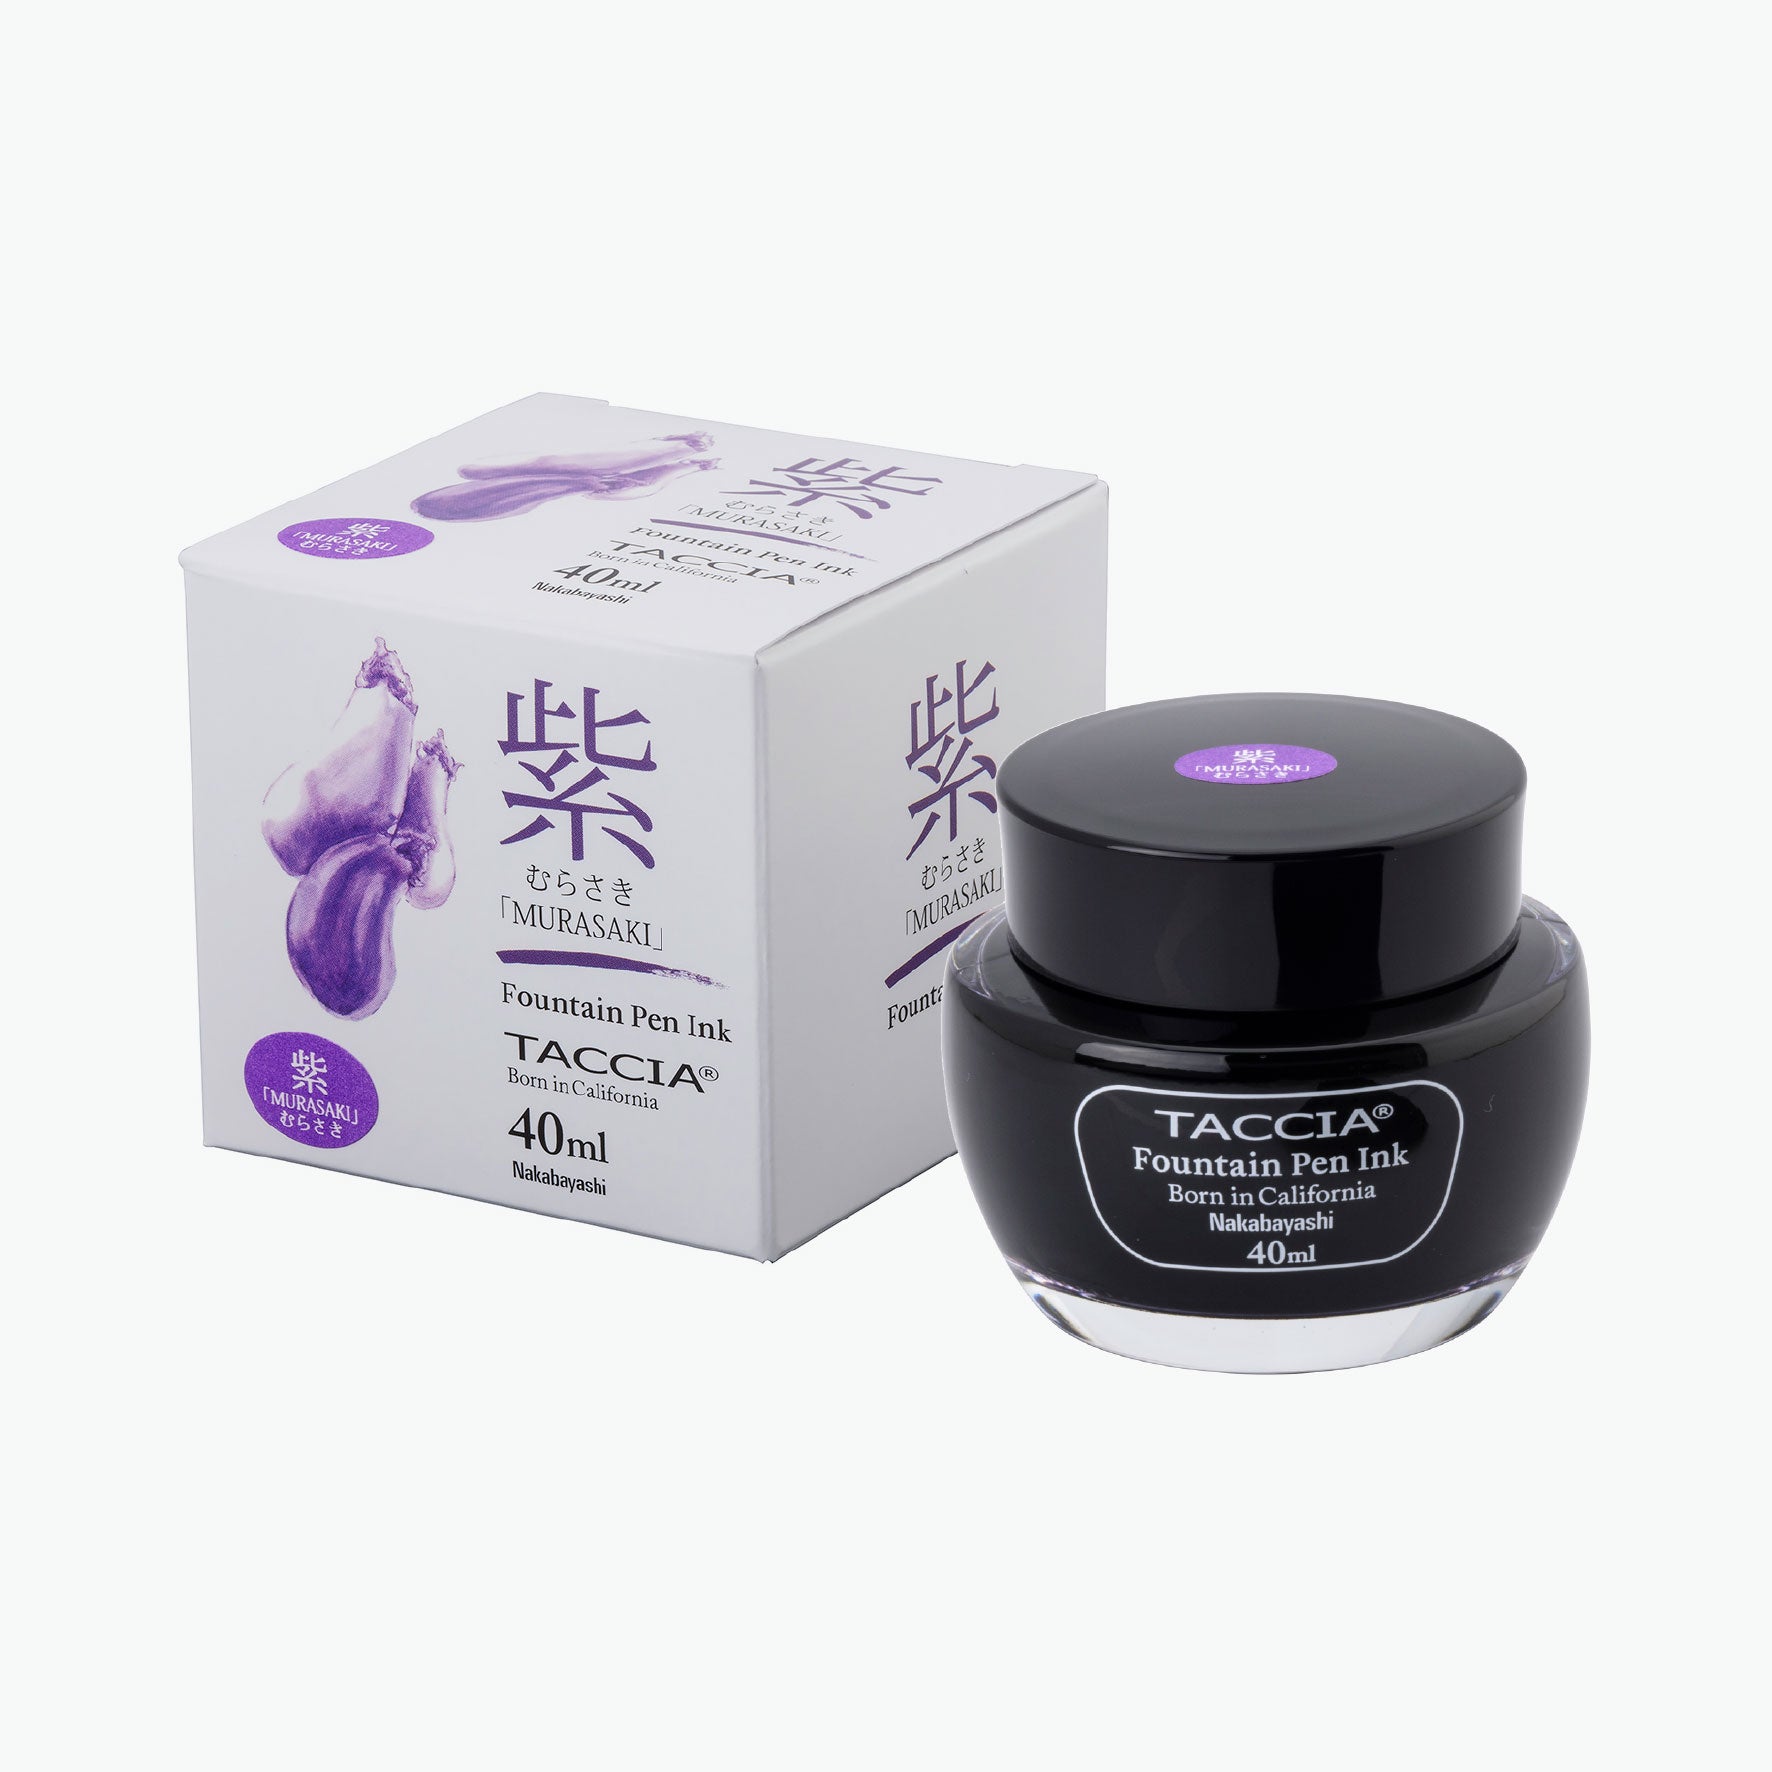 Taccia - Fountain Pen Ink - Standard - Murasaki (Purple)